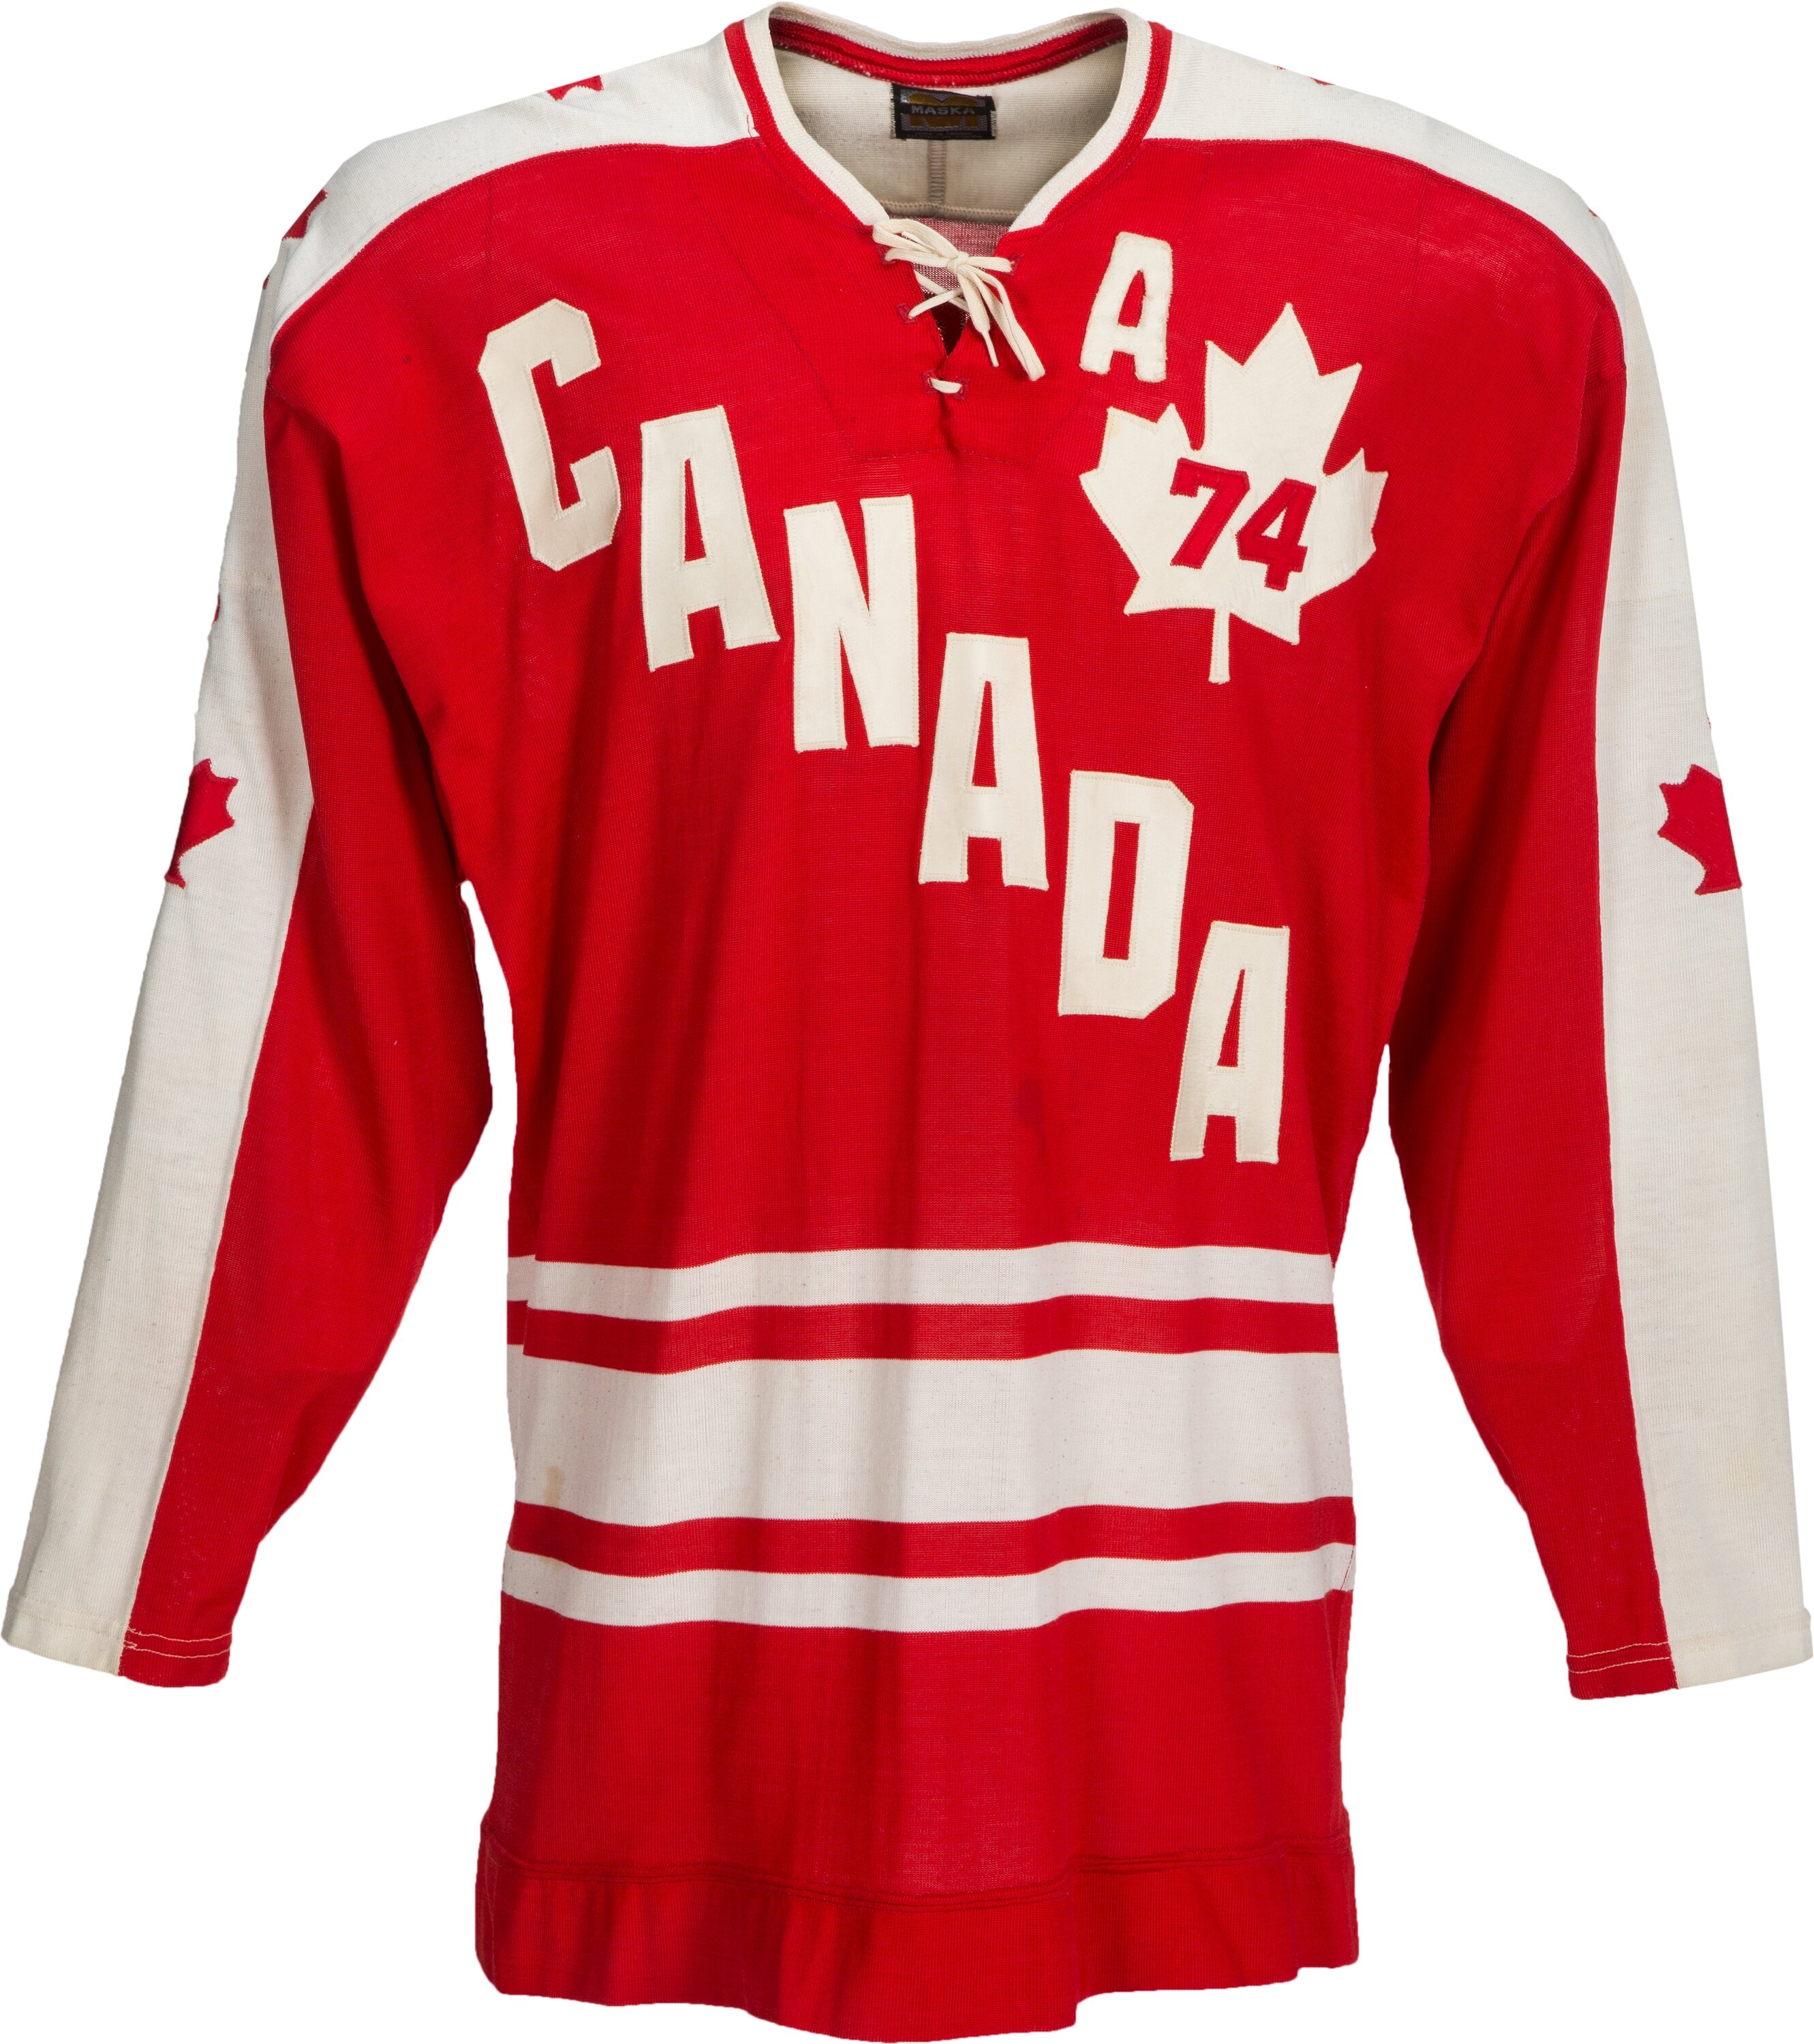 In Photos: Team Canada hockey jerseys through the years - The